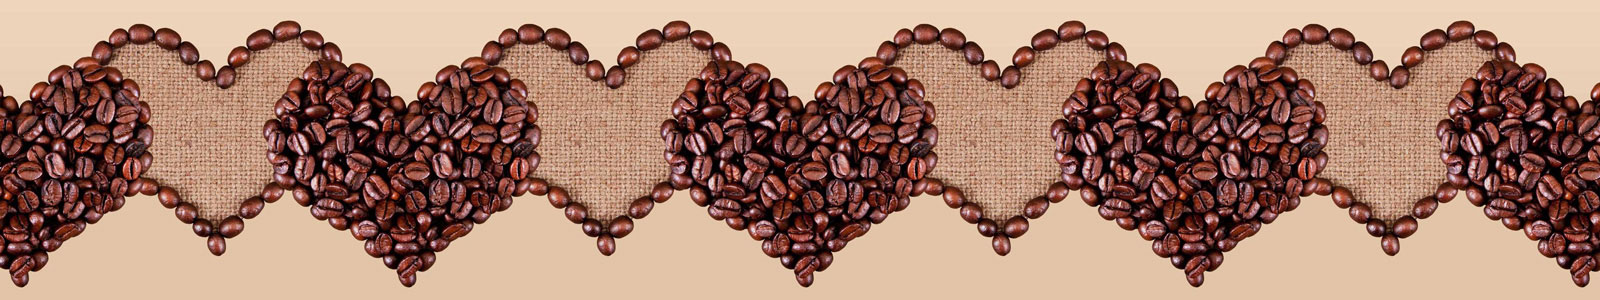 №2364 - Сердечки из зерен кофе